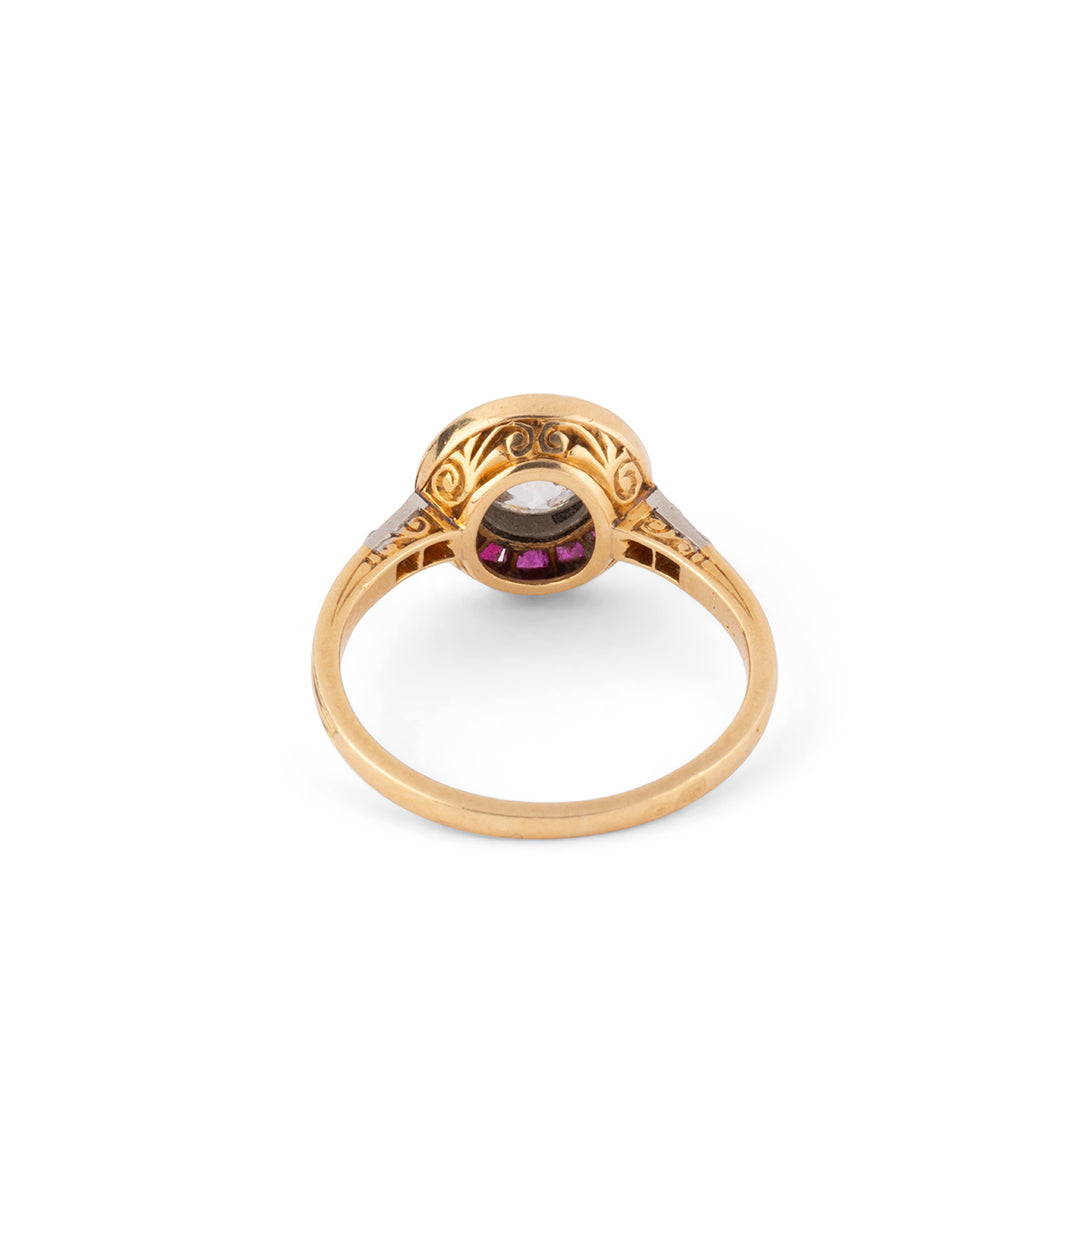 Edwardian engagement ring diamond and rubies "Nadra" - Caillou Paris 